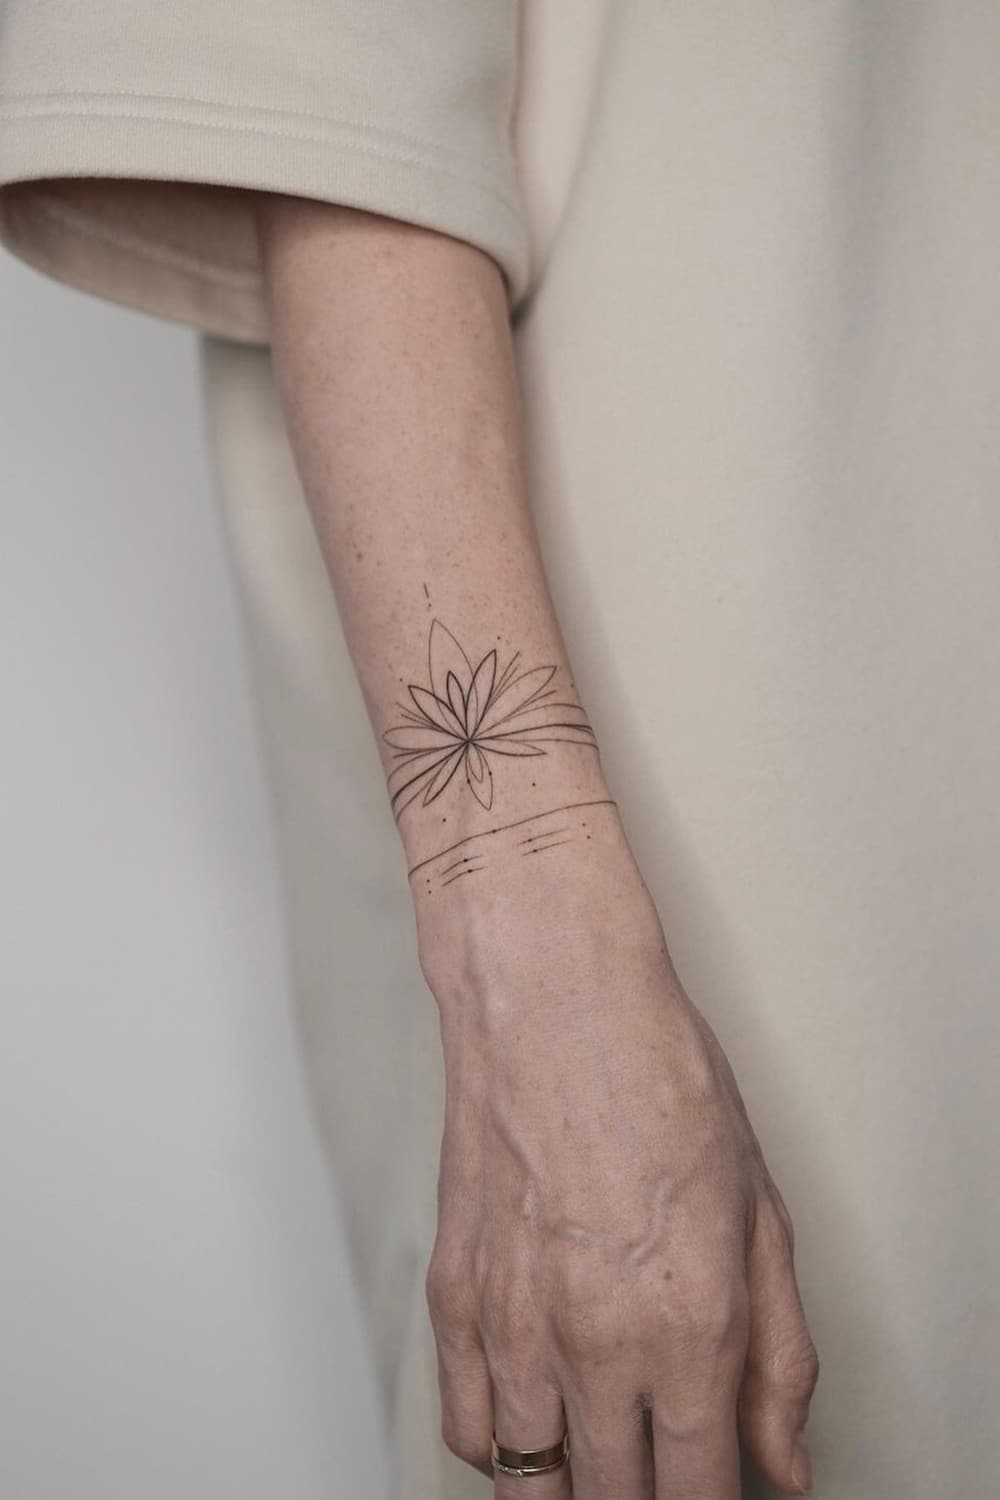 Lotus armband tattoo